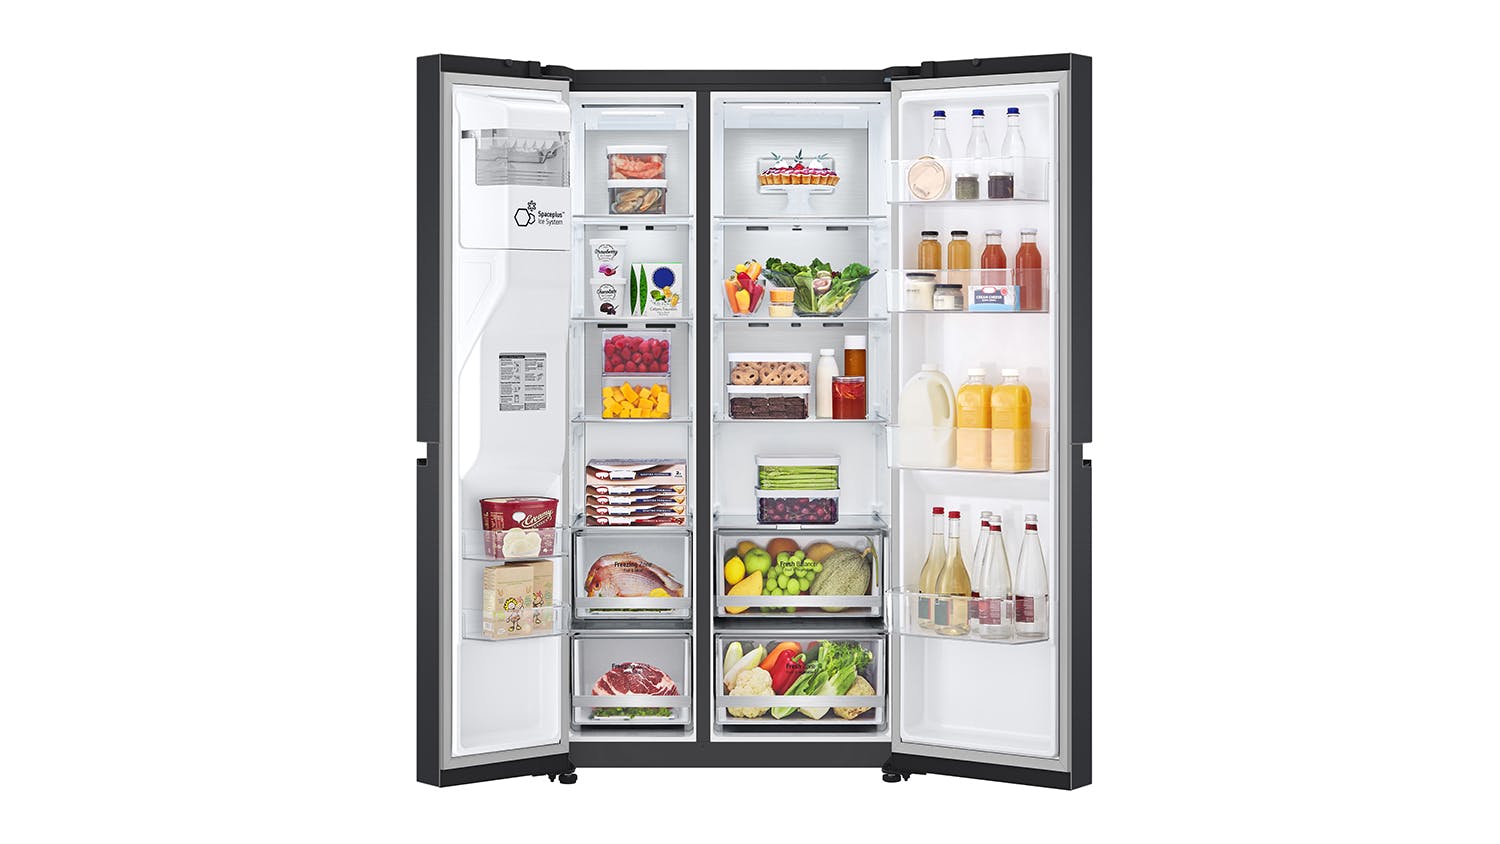 LG 635L Side-by-Side Fridge Freezer with Ice & Water - Matte Black (GS-L600MBL)